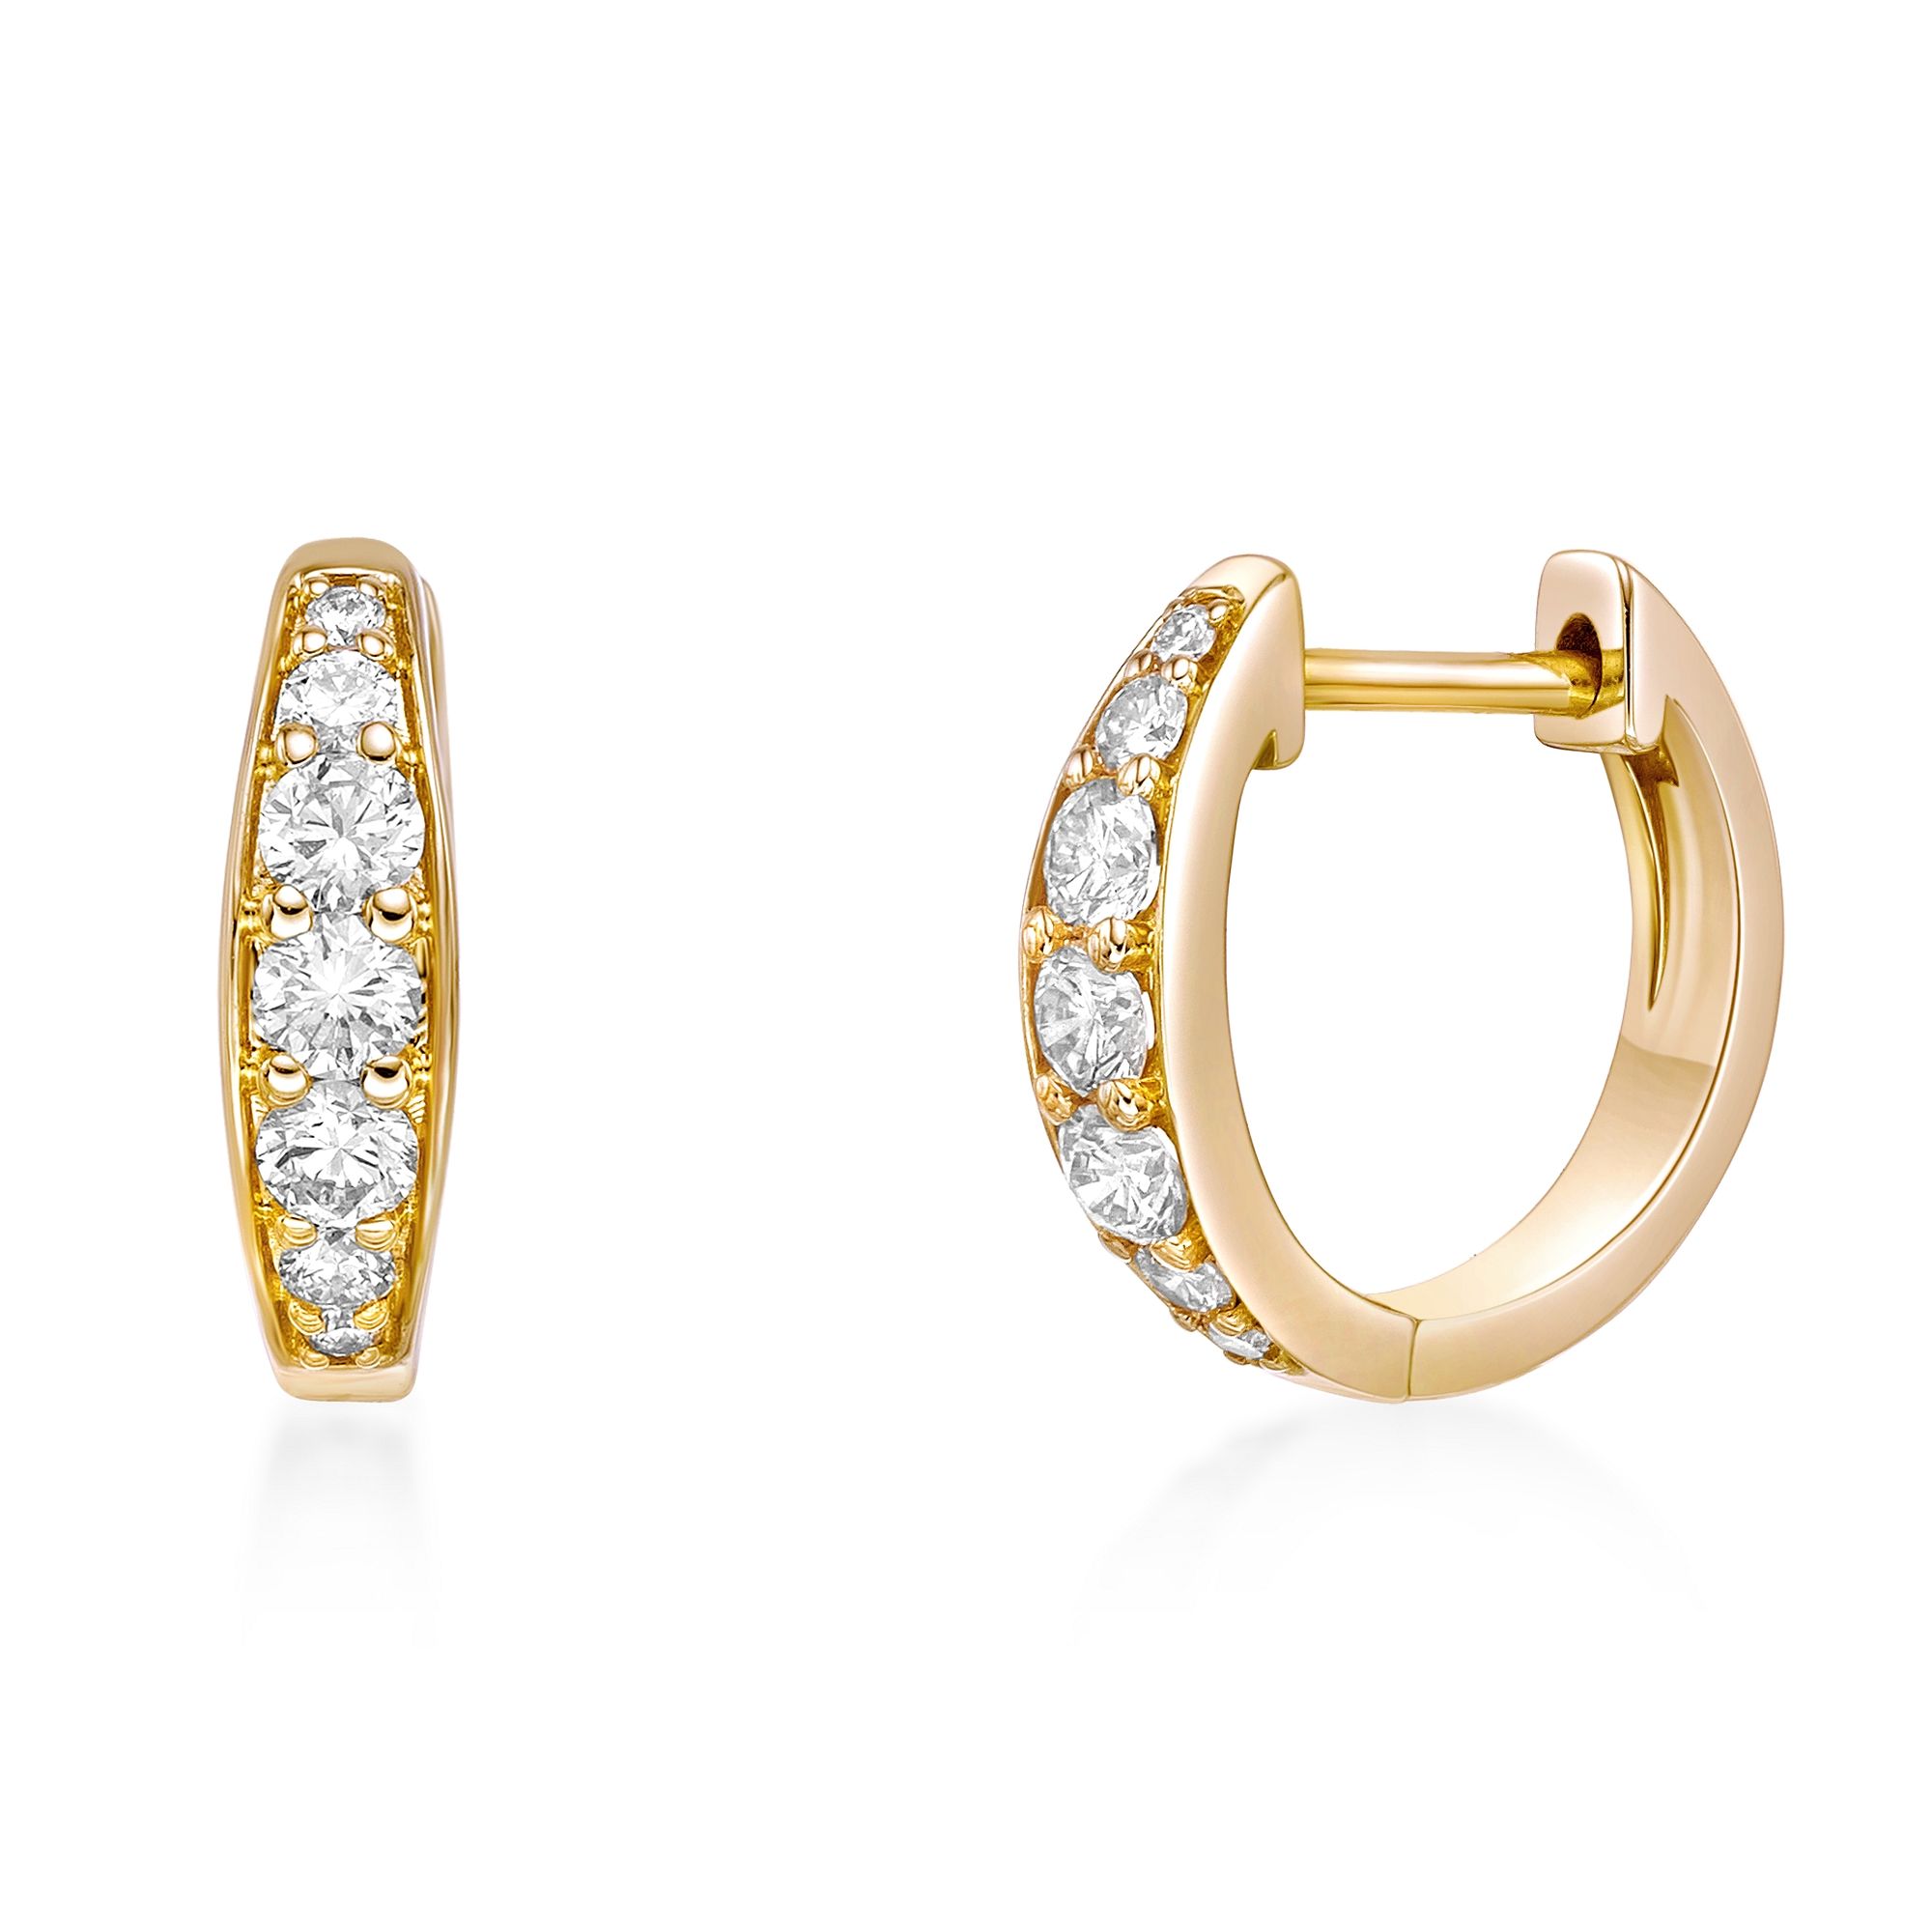 53523-earrings-lab-grown-diamond-yellow-gold-53523.jpg